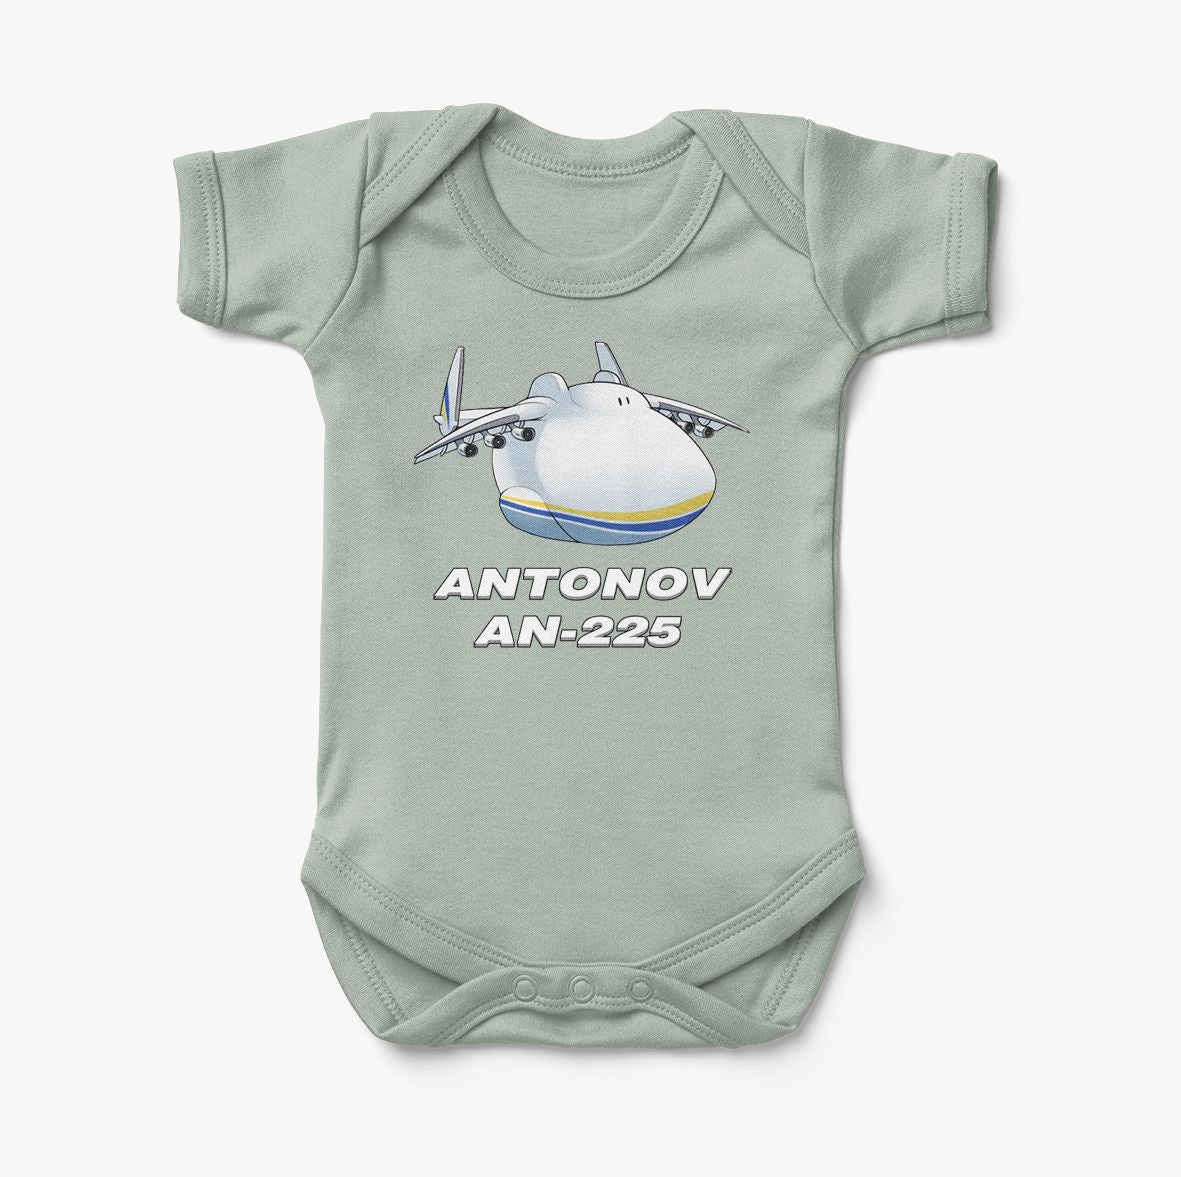 Antonov AN-225 (21) Designed Baby Bodysuits